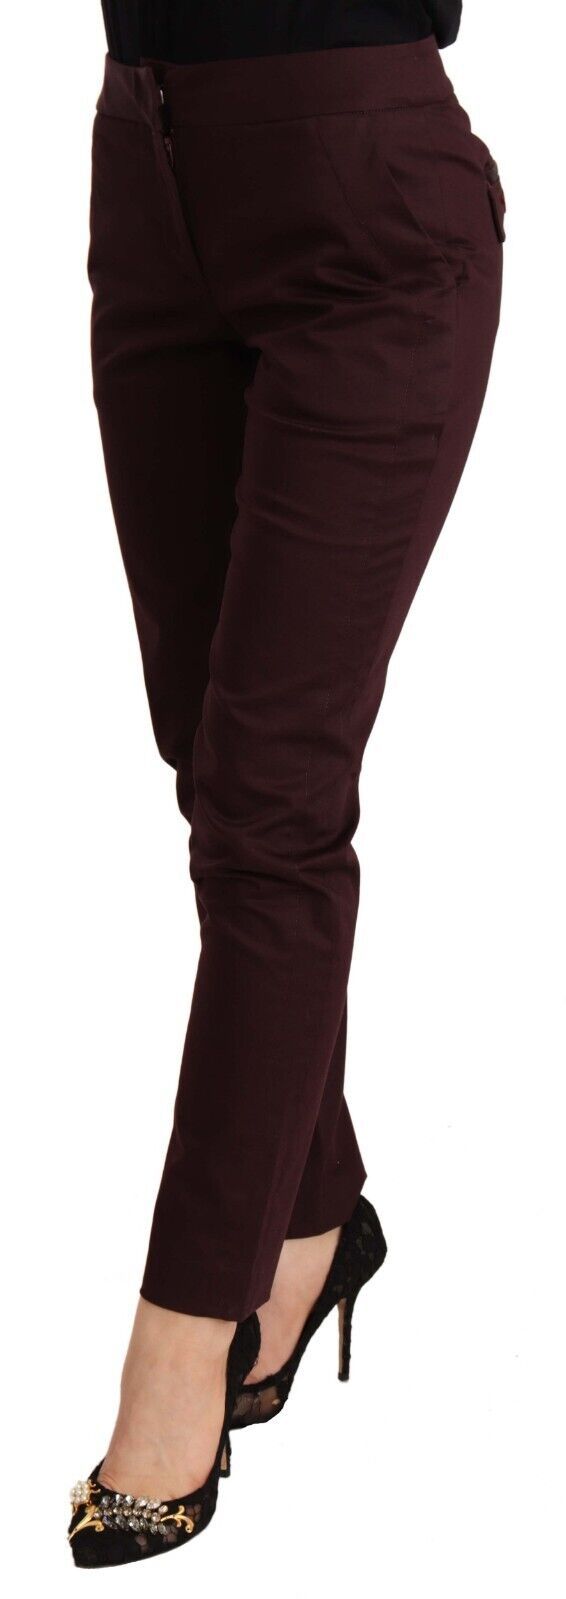 Just Cavalli Maroon Slim Fit Skinny Pants with Zipper Detail